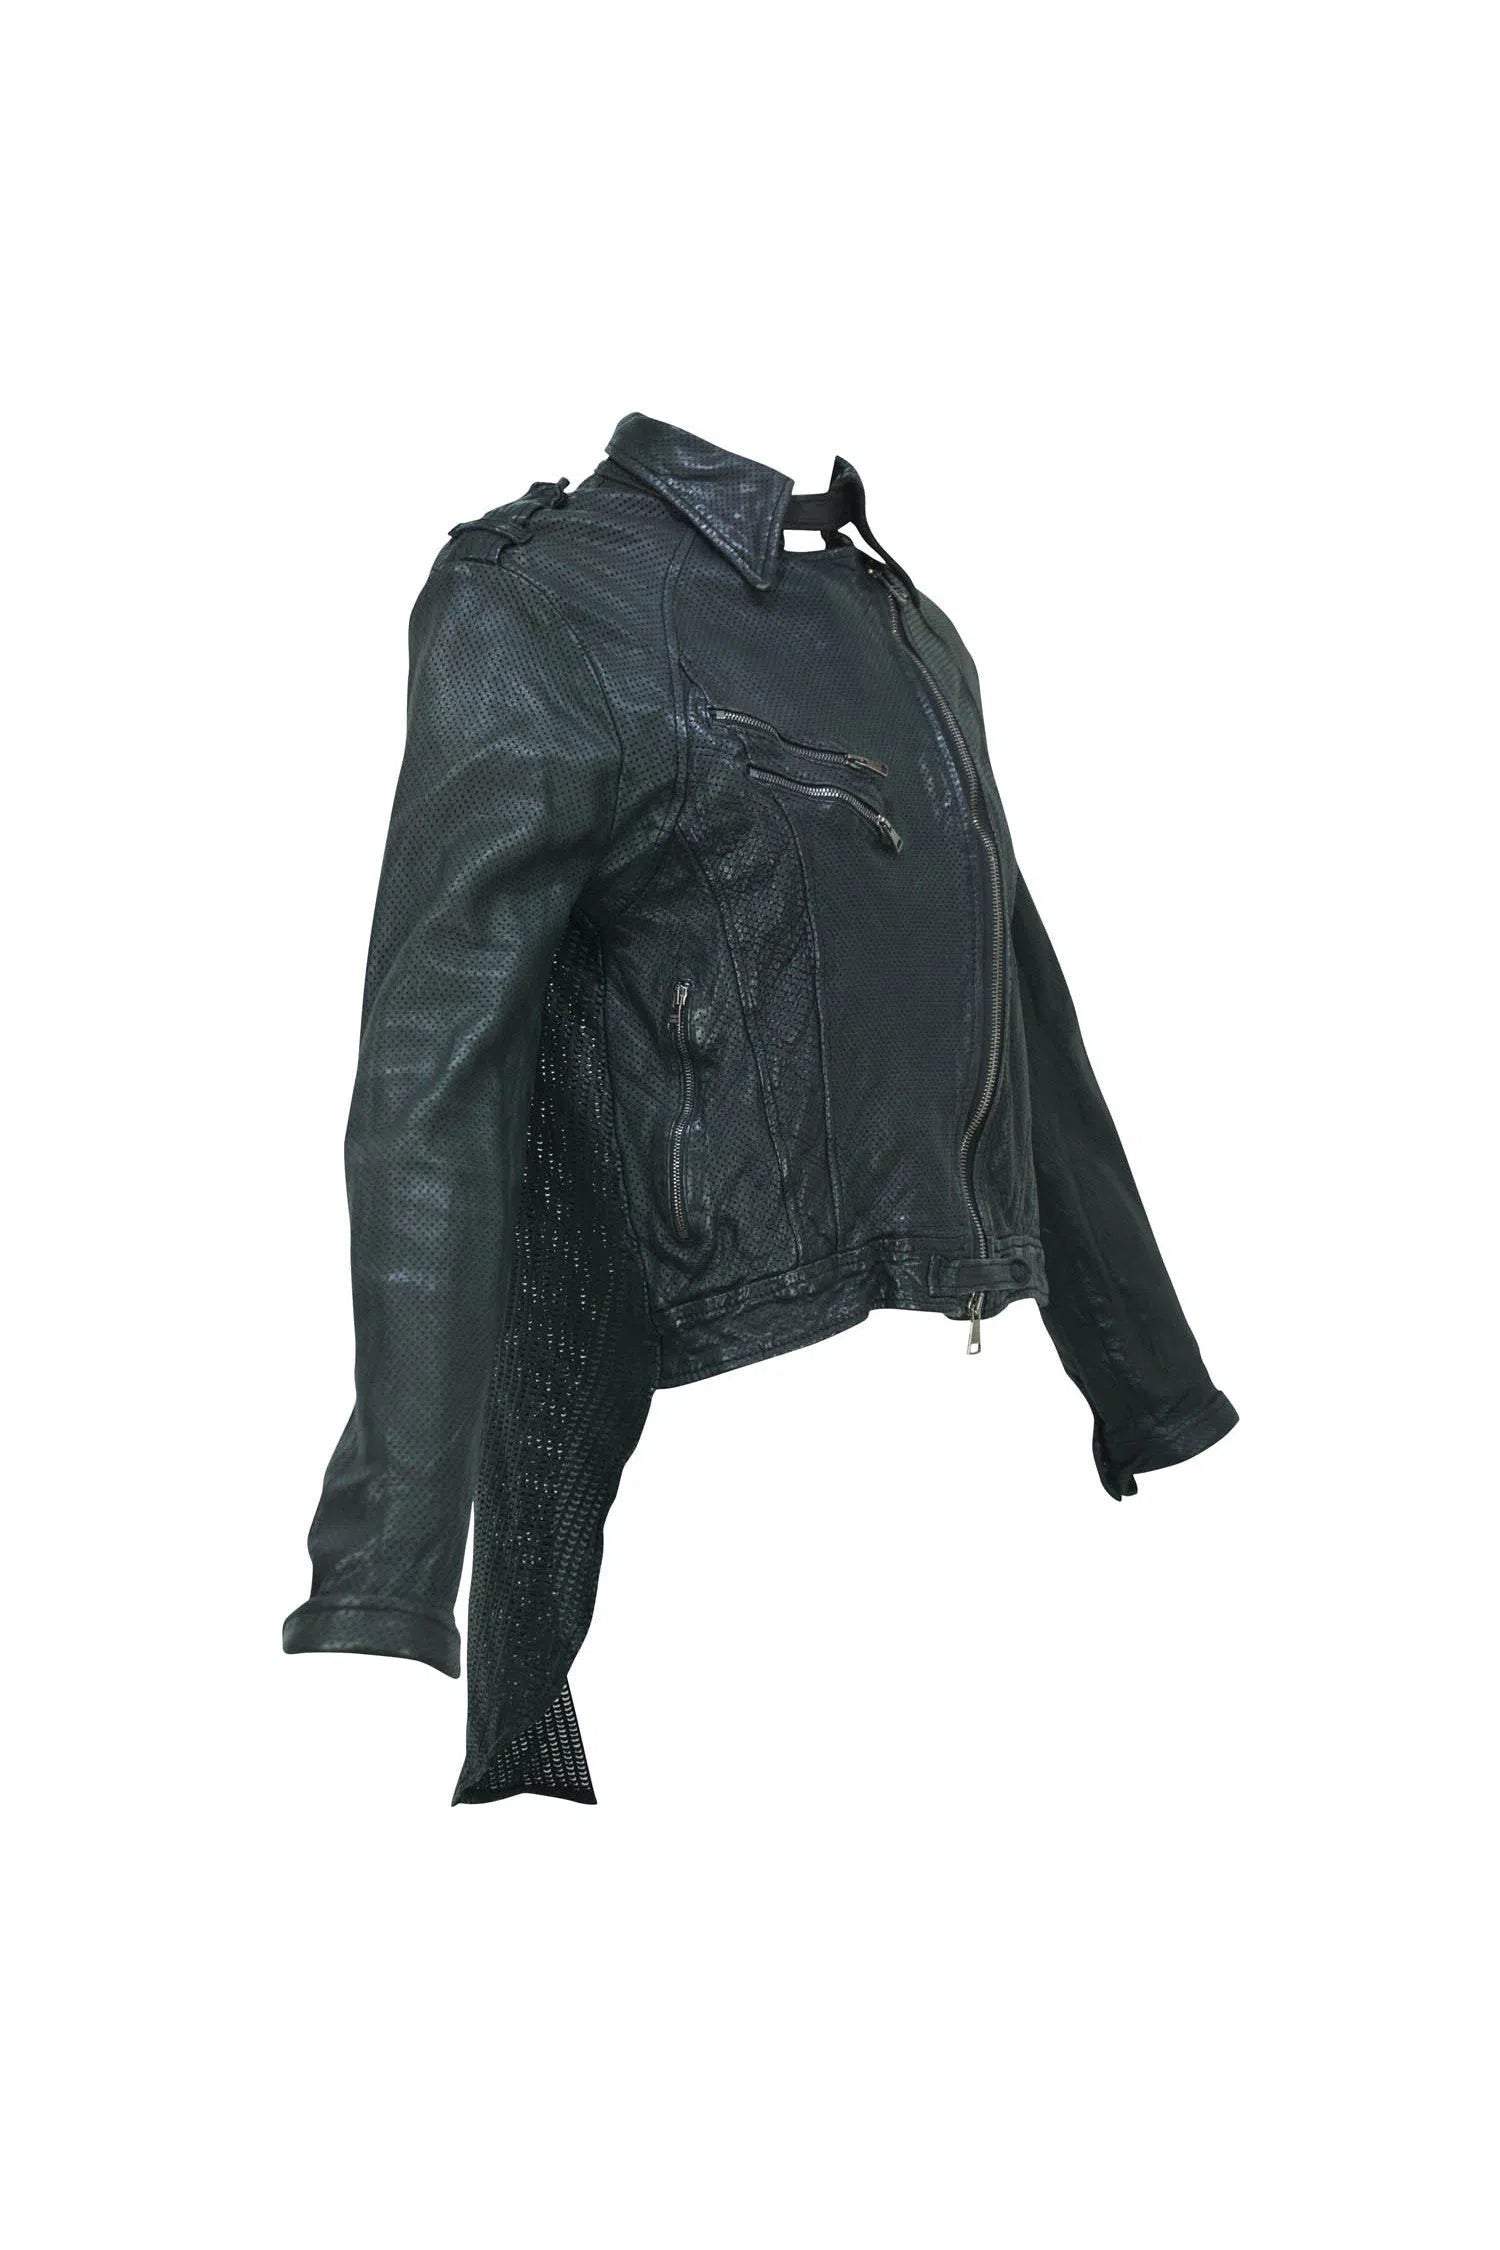 Giorgio Brato Preforated Leather Motorcycle Jacket